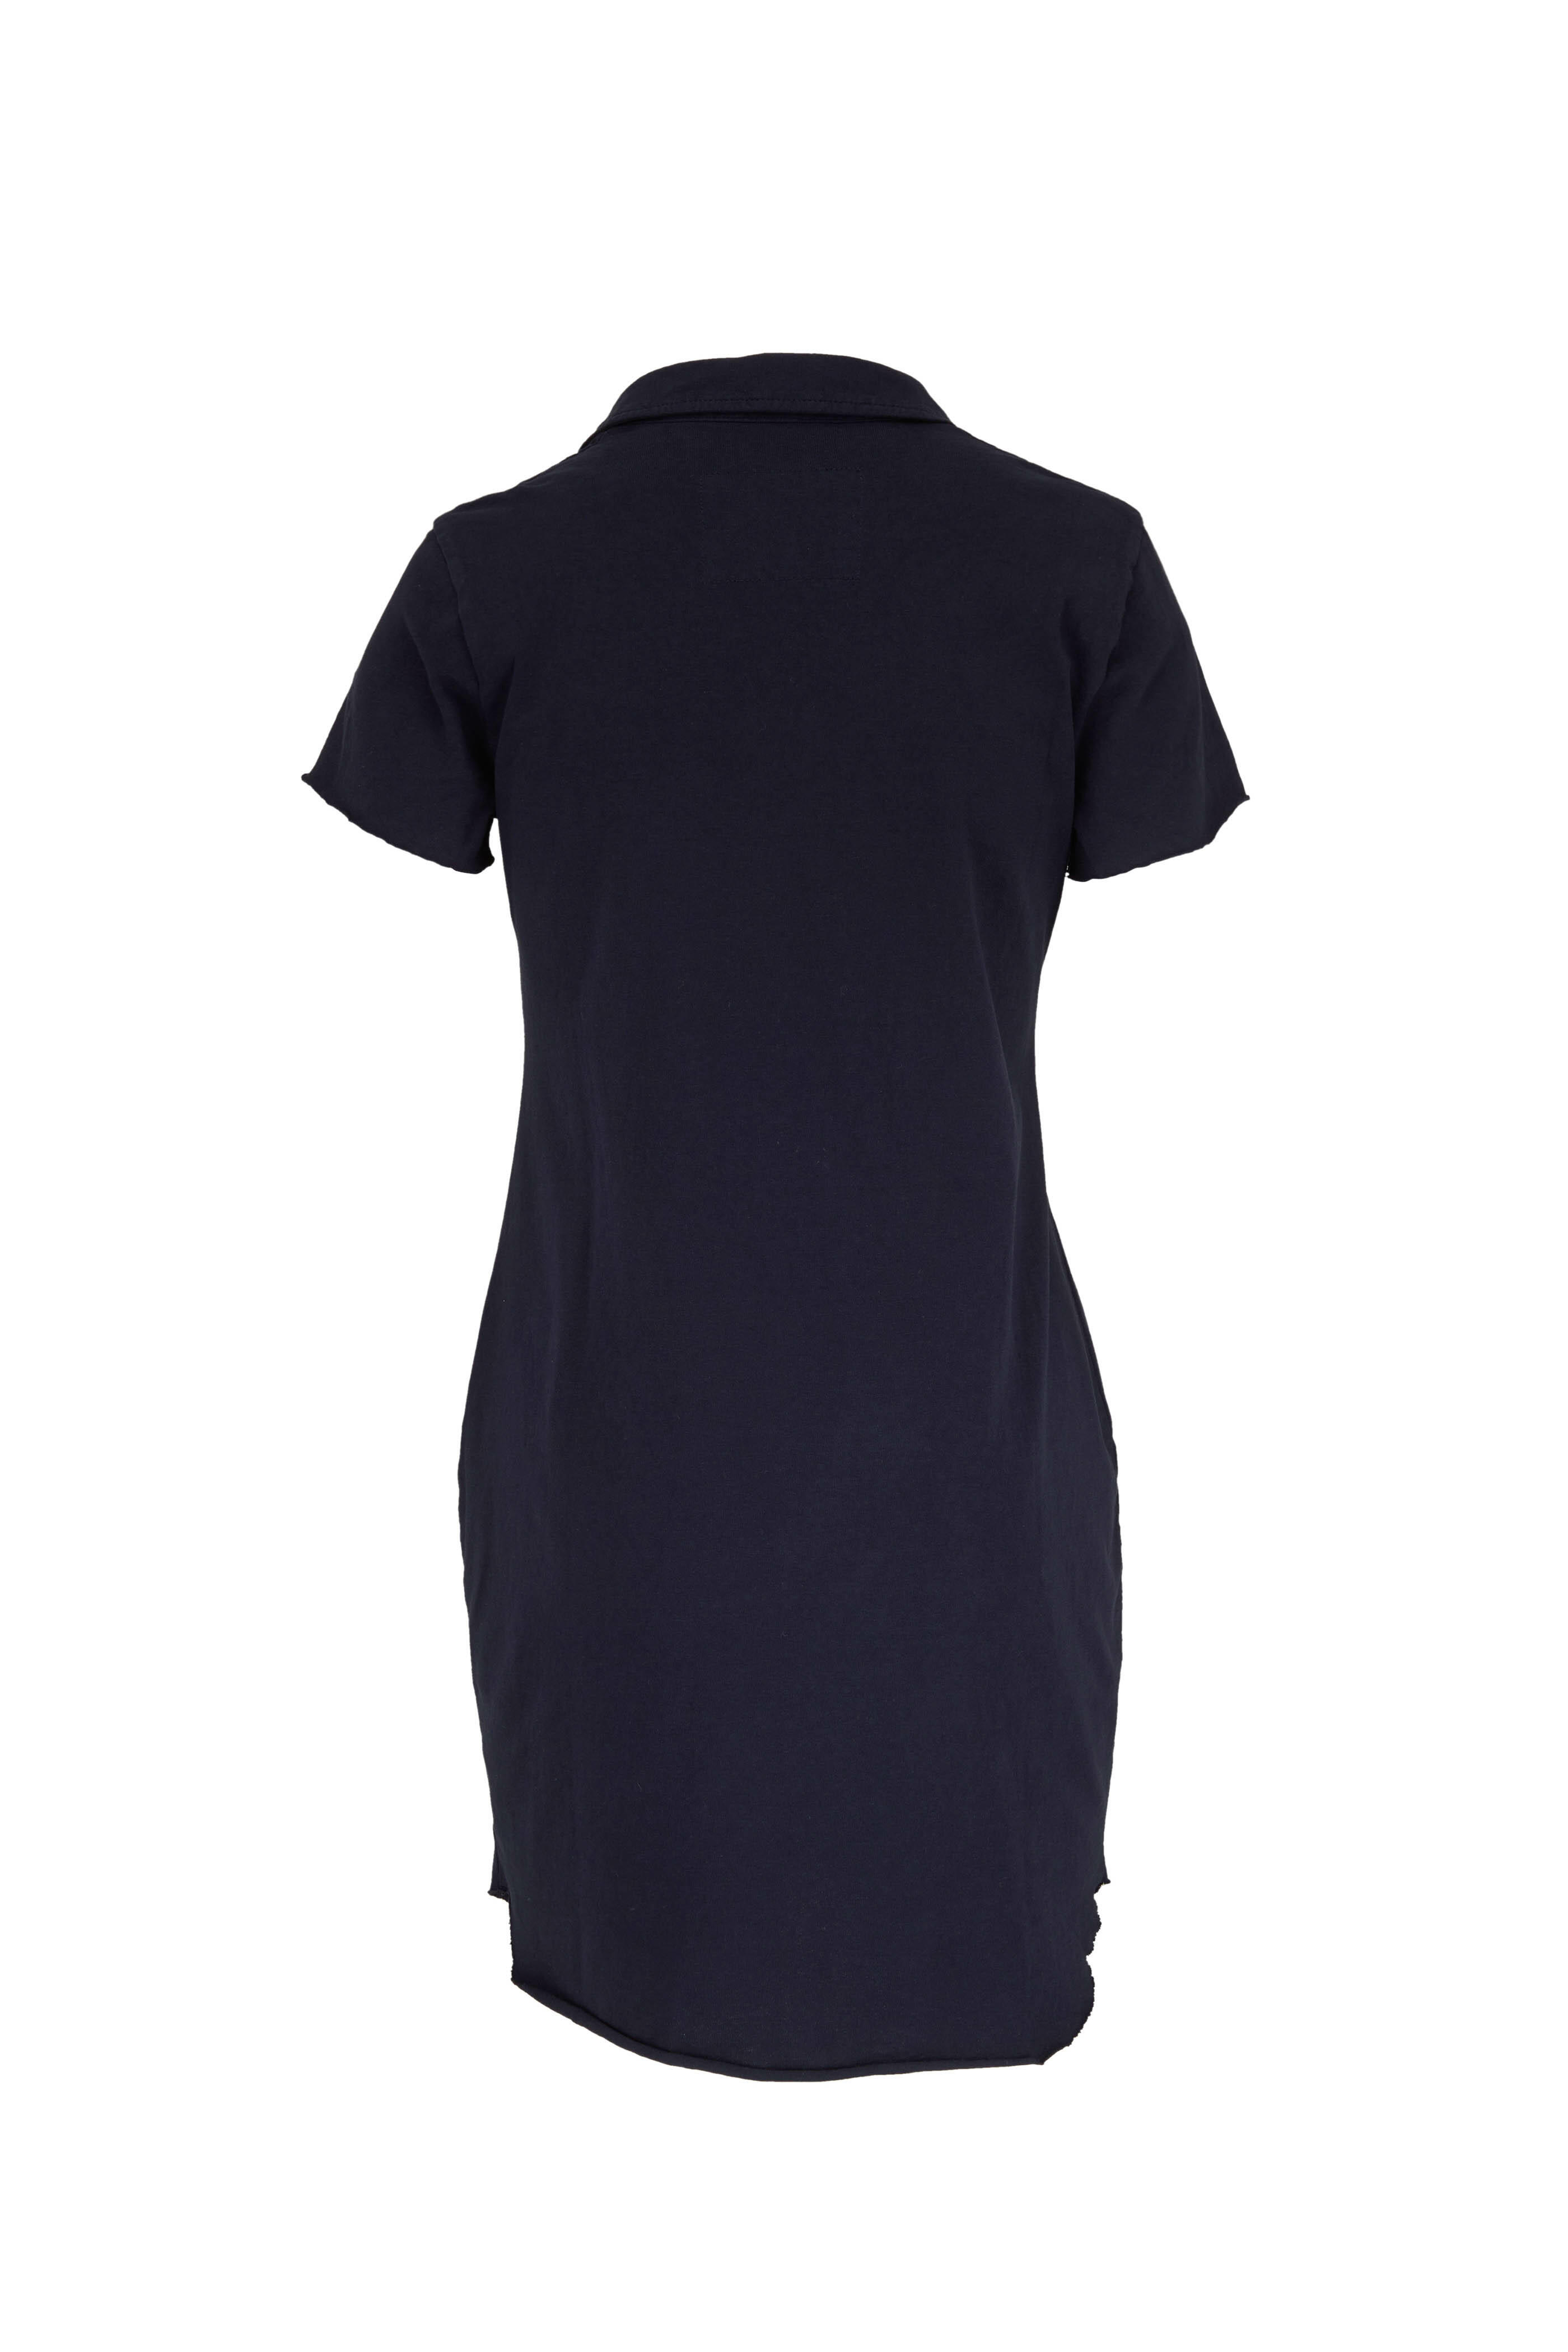 Frank & Eileen - Navy Short Sleeve Polo Dress | Mitchell Stores